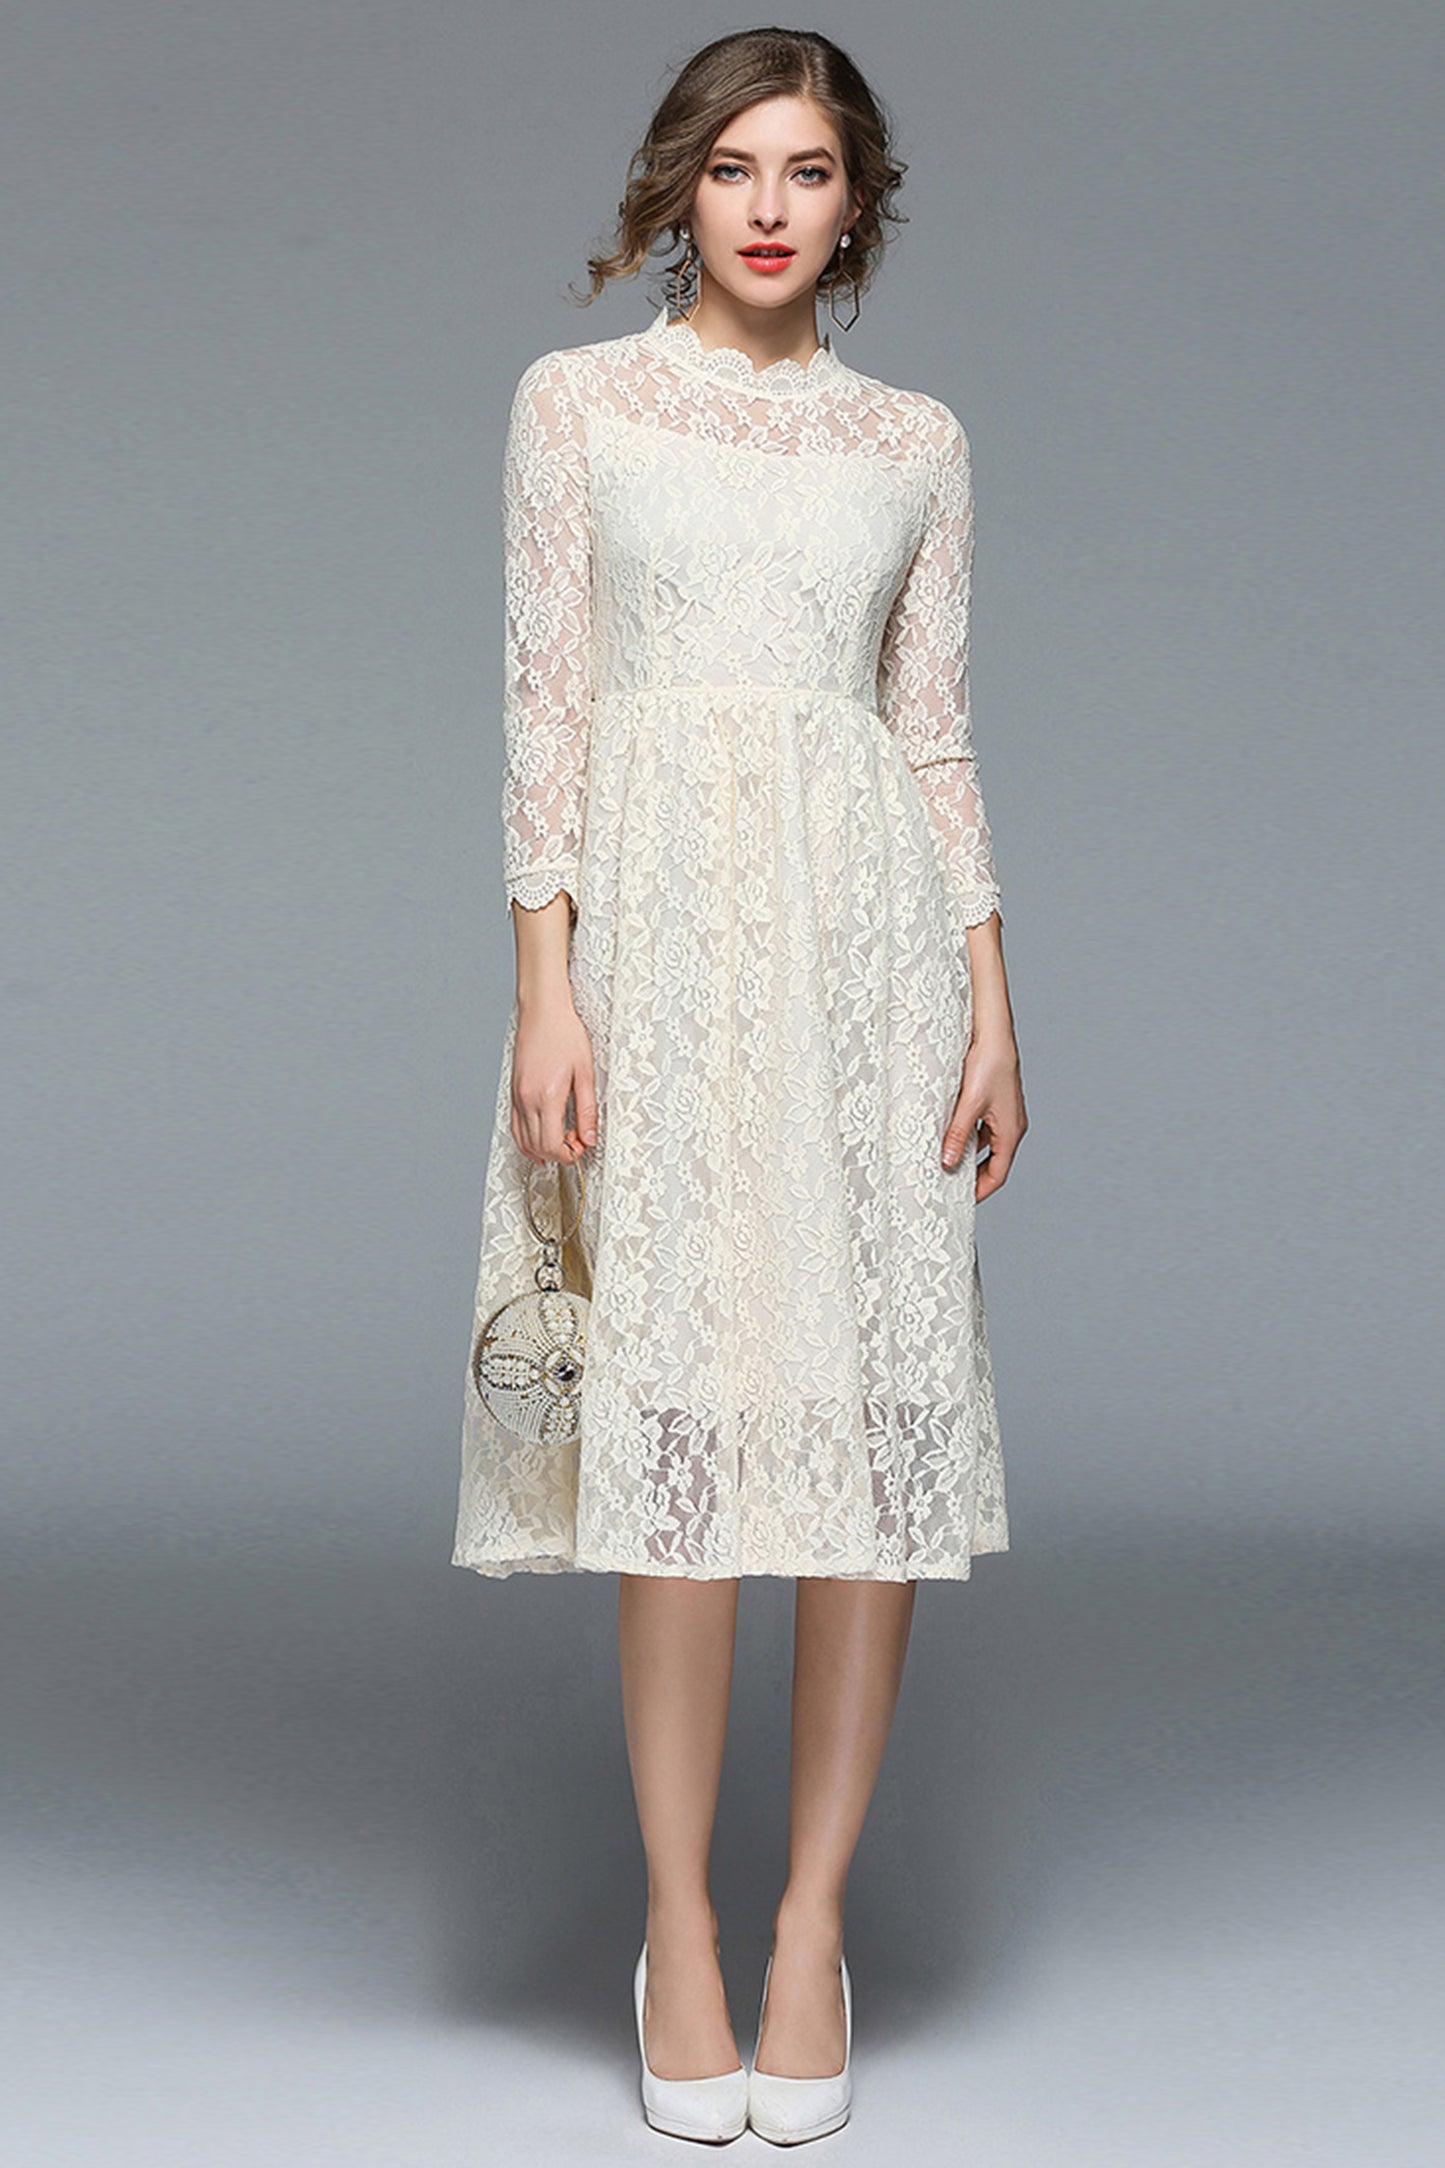 Women's Elegant Floral Lace 3/4 Sleeve Bridesmaid Formal Midi Dress